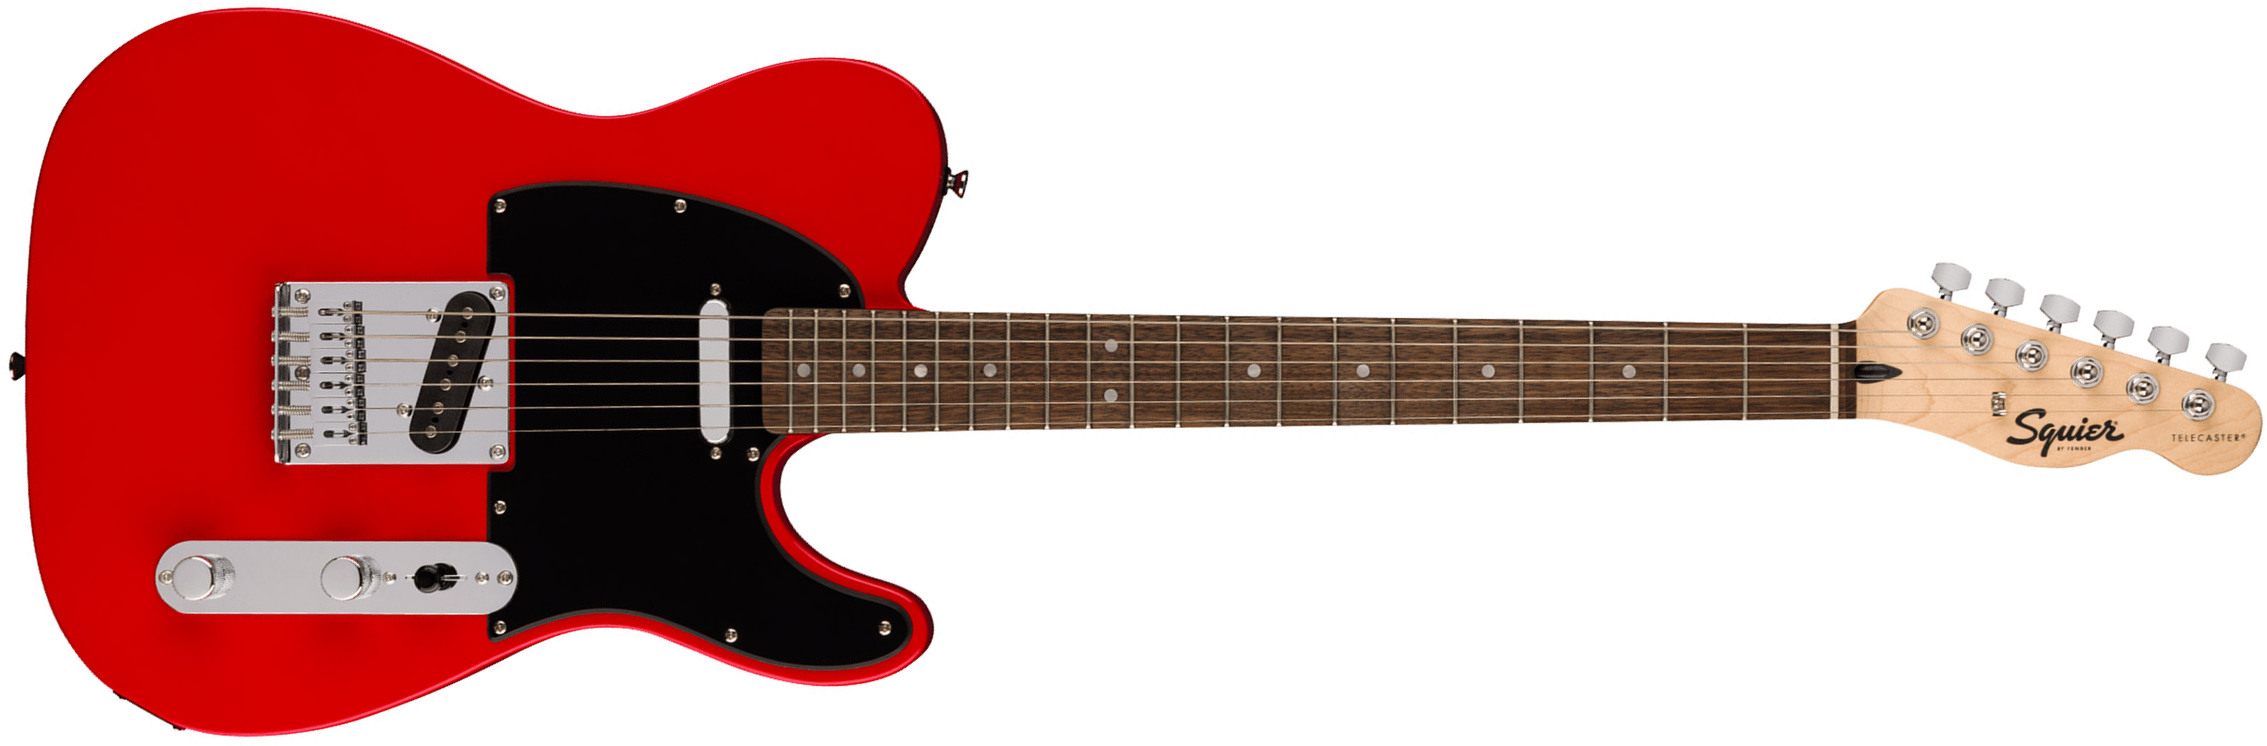 Squier Tele Sonic 2s Ht Lau - Torino Red - Guitarra eléctrica con forma de tel - Main picture